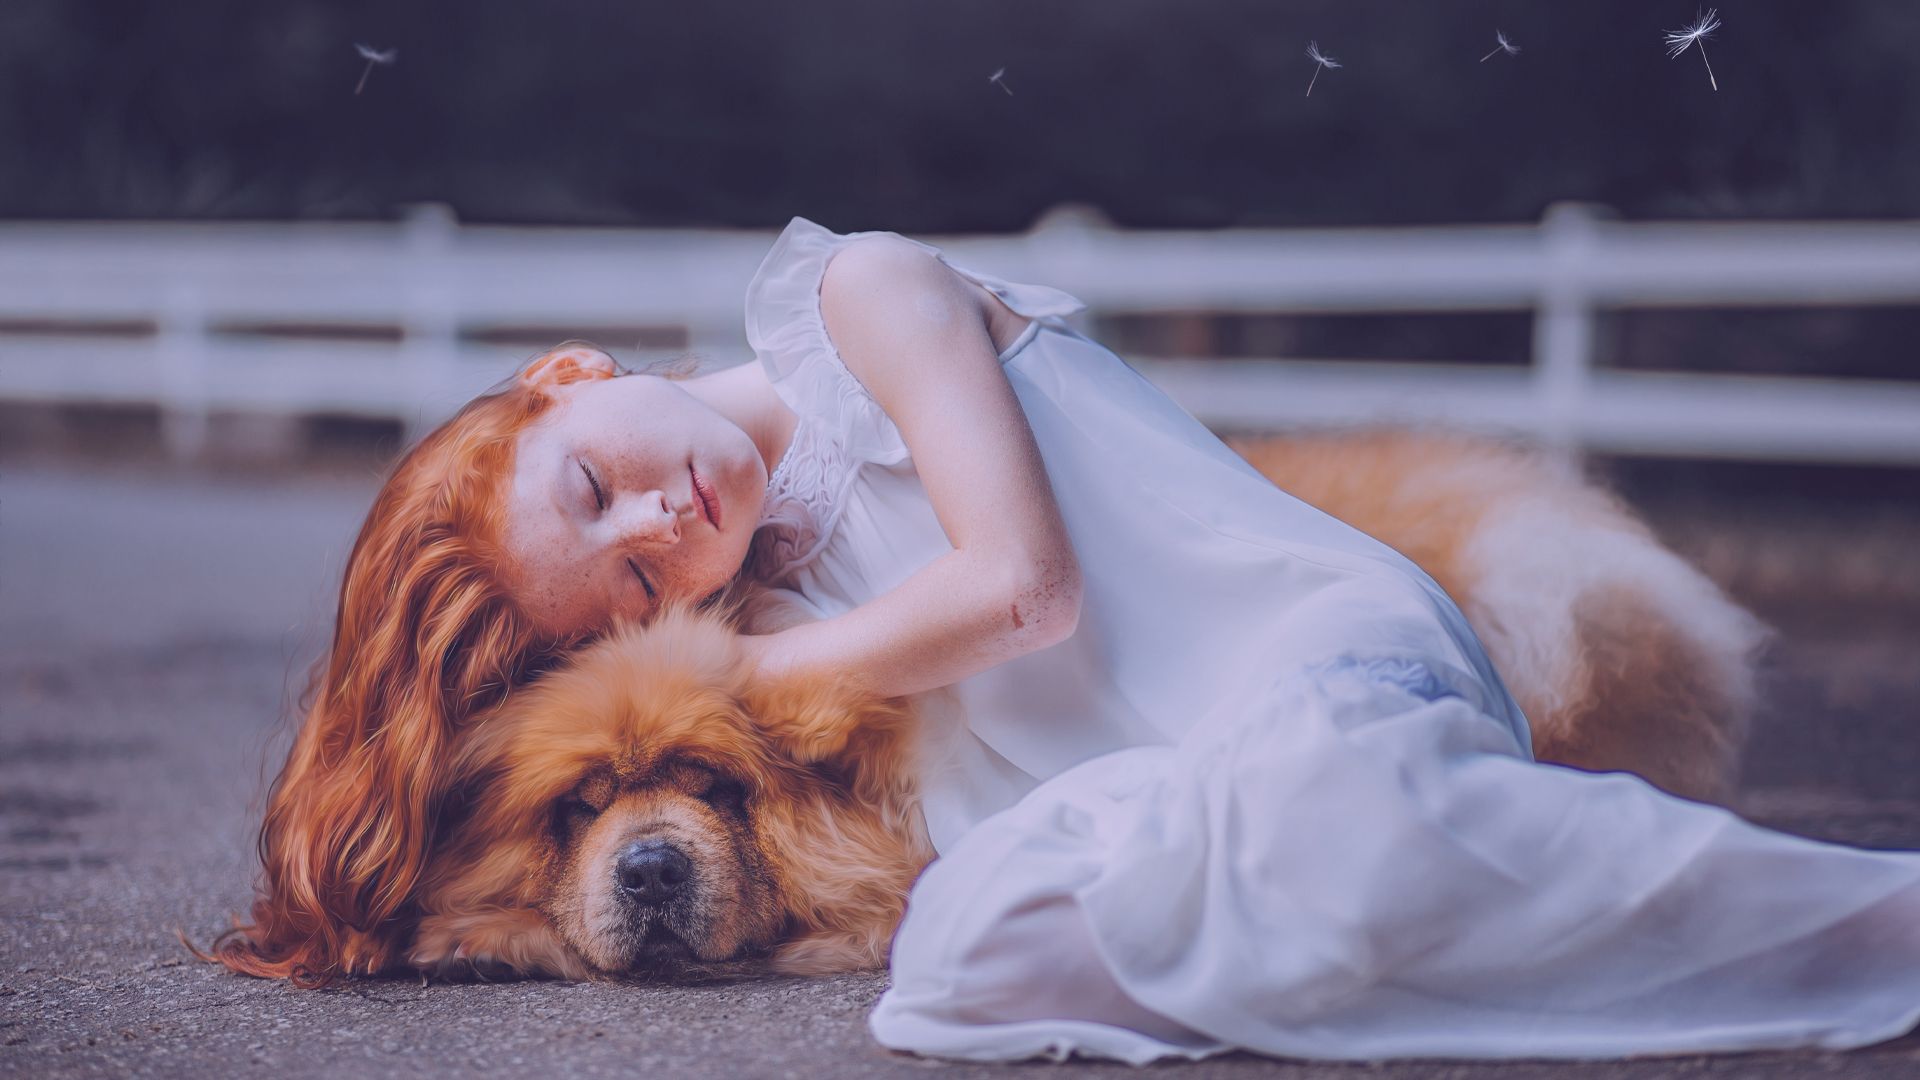 little girl lies next to her unconscious dog